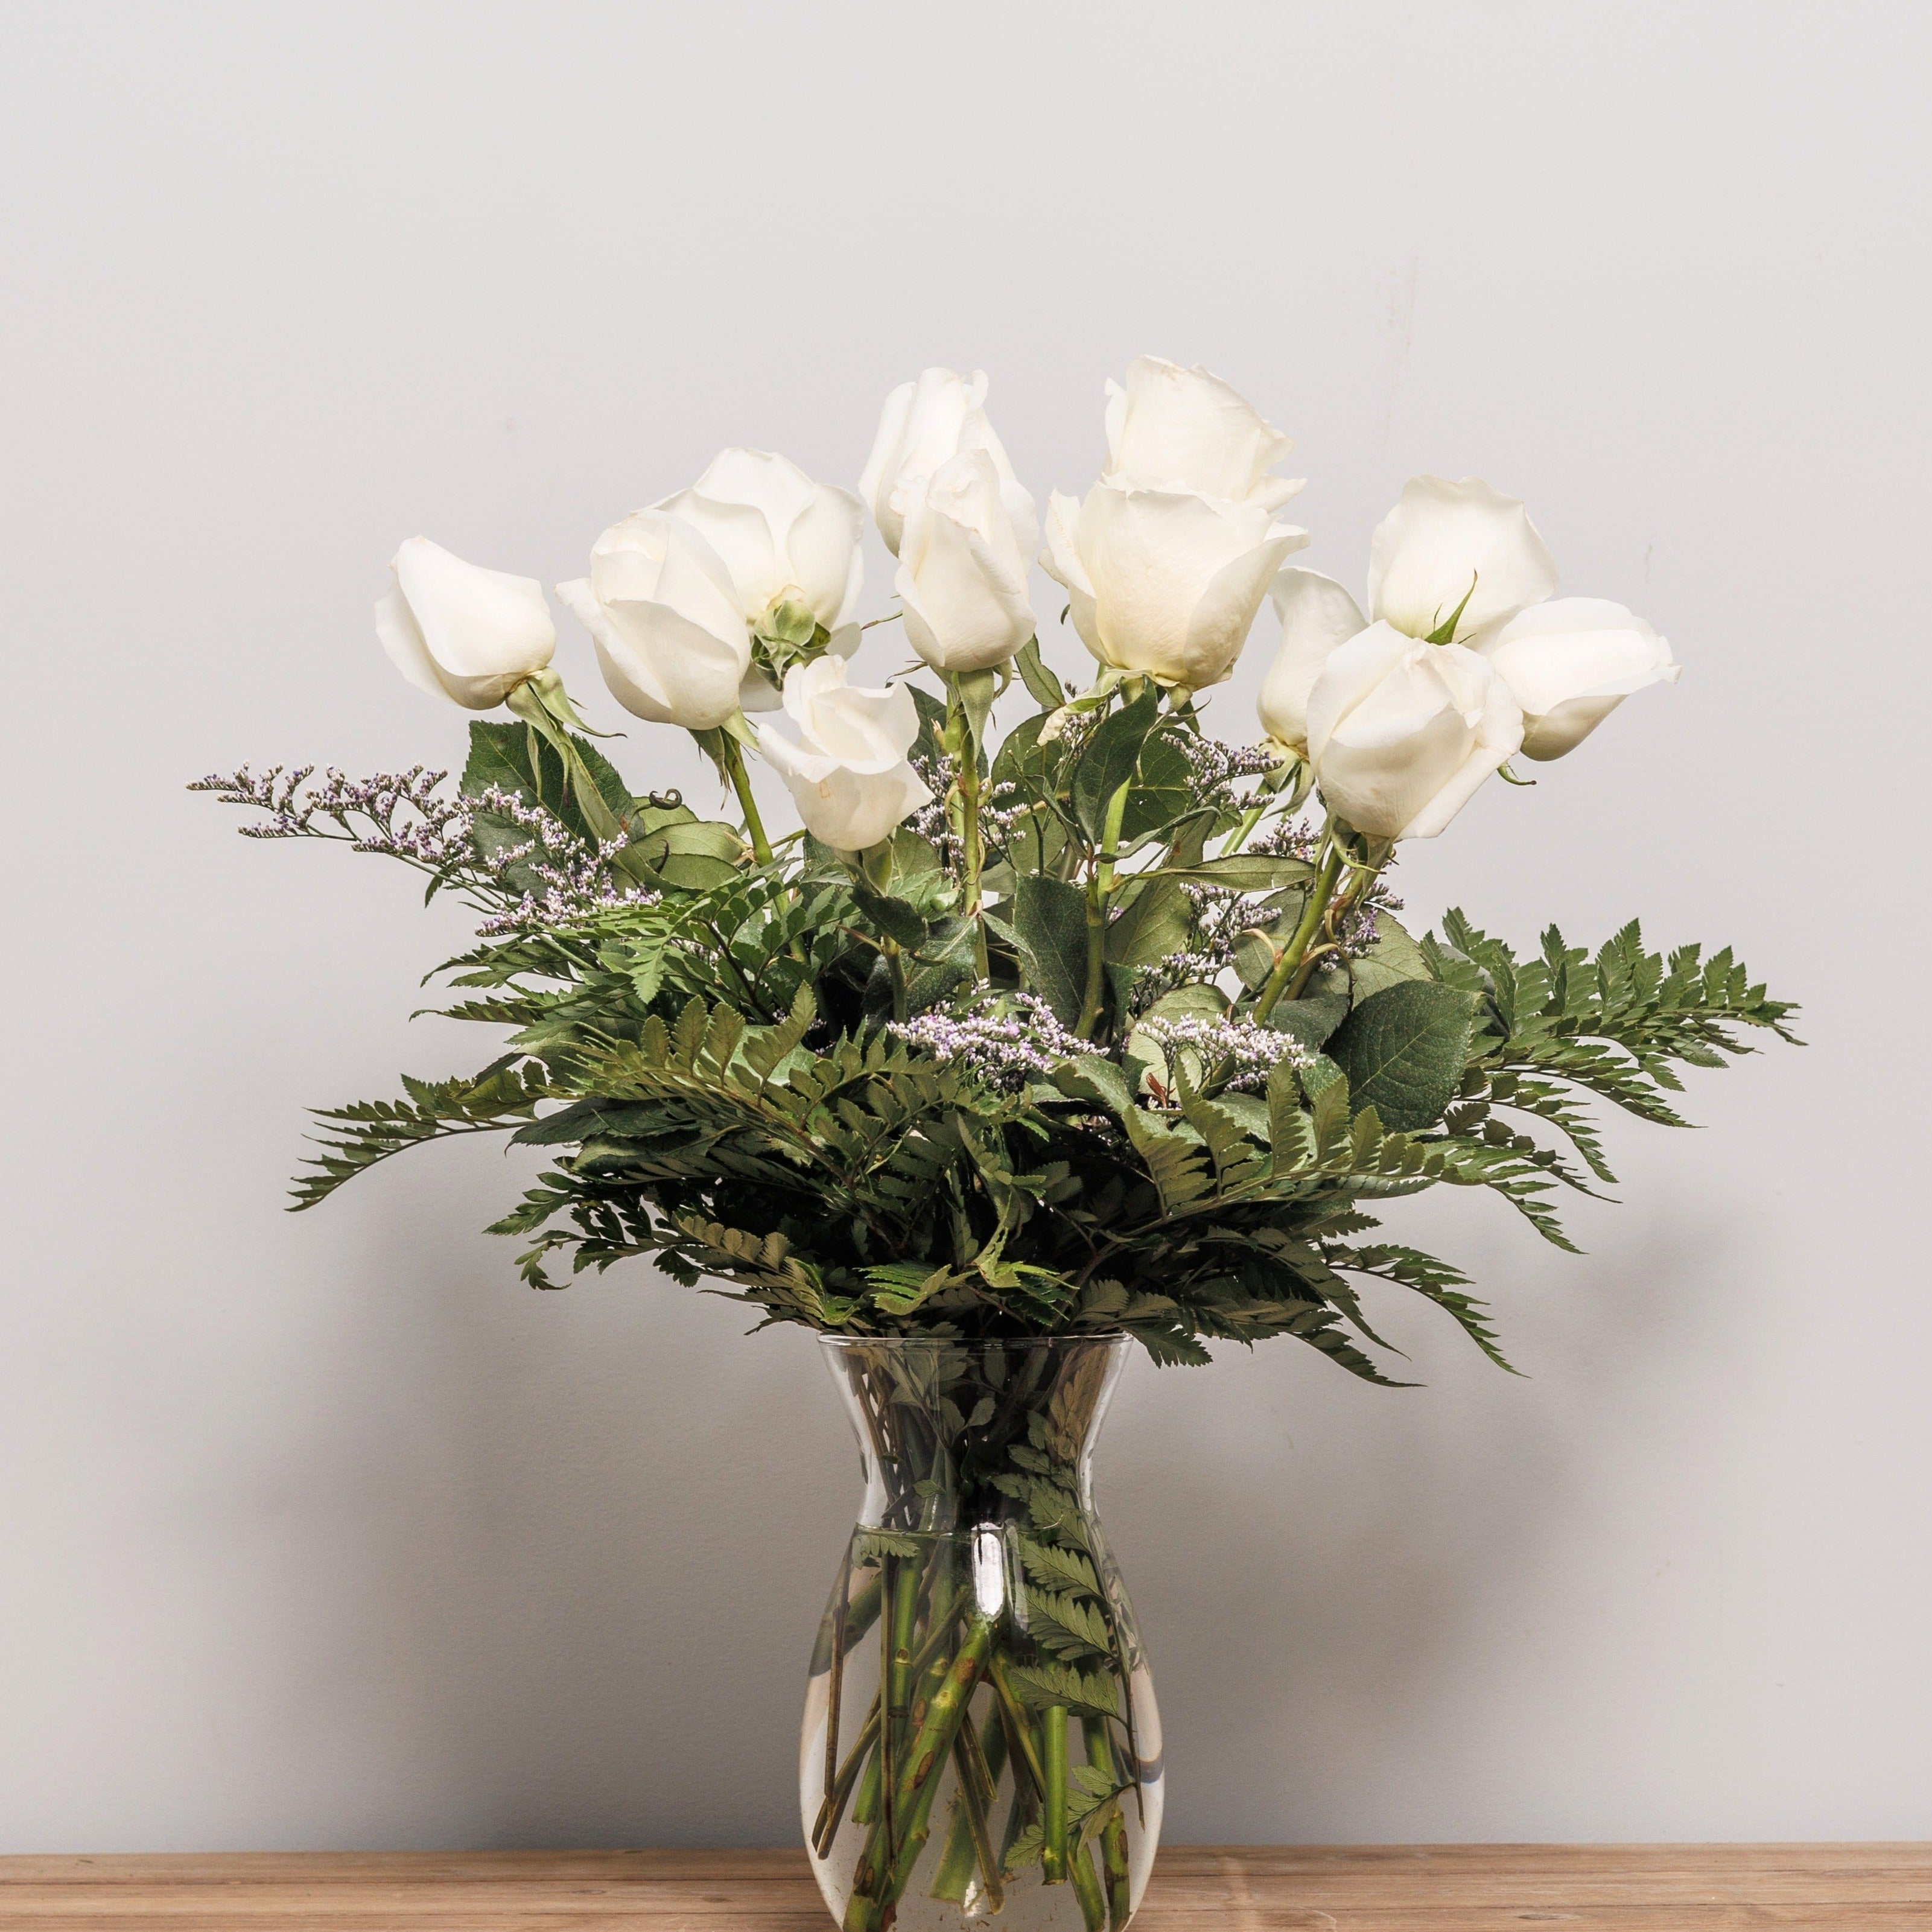 A dozen white roses arranged in a vase.